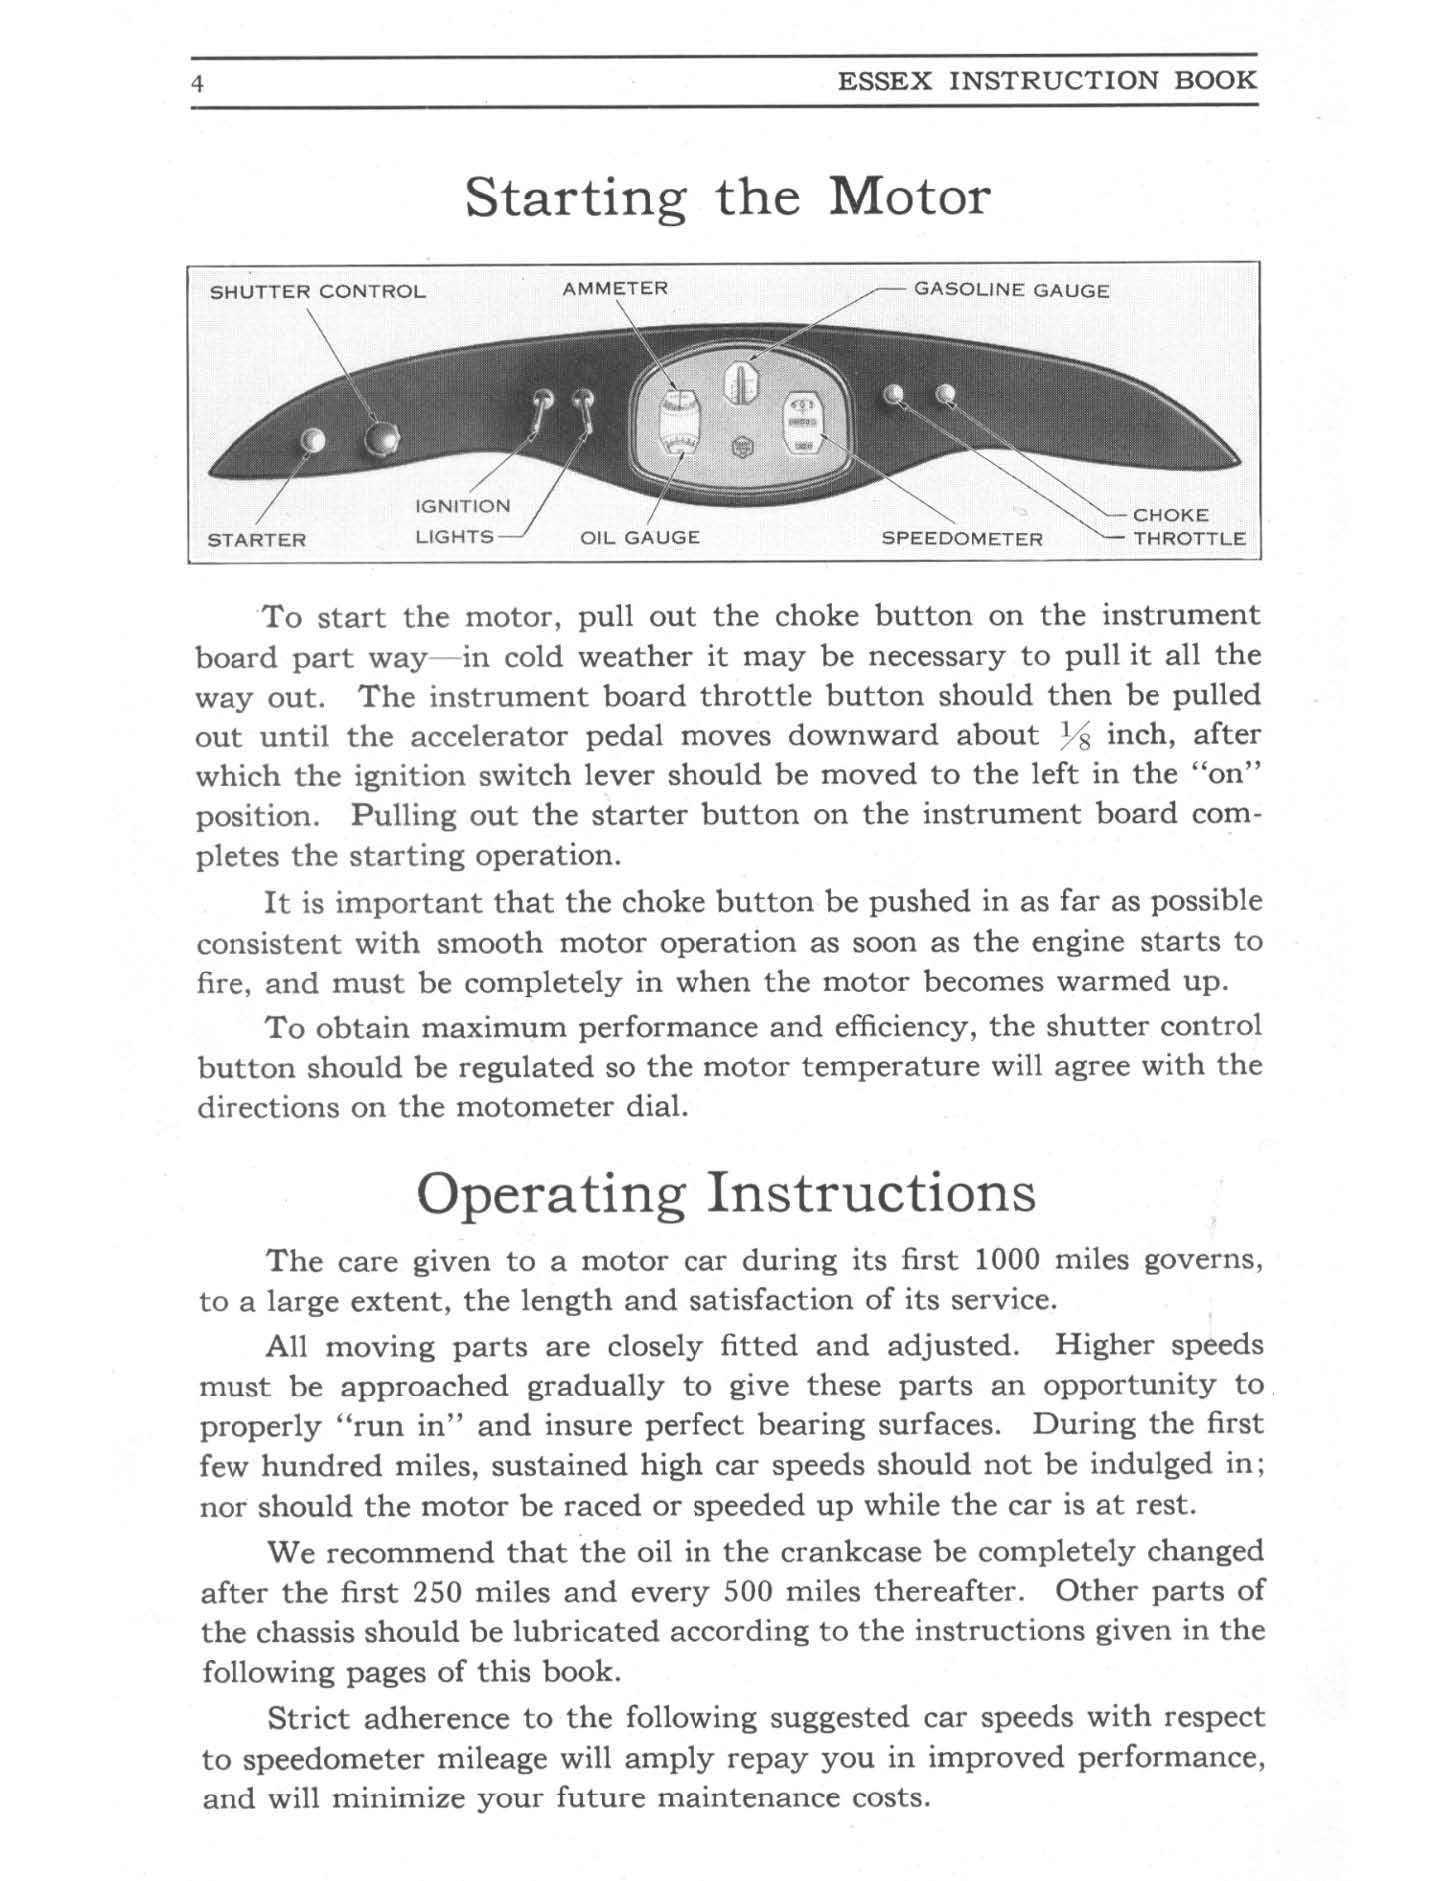 1927 Essex Instruction Book-06